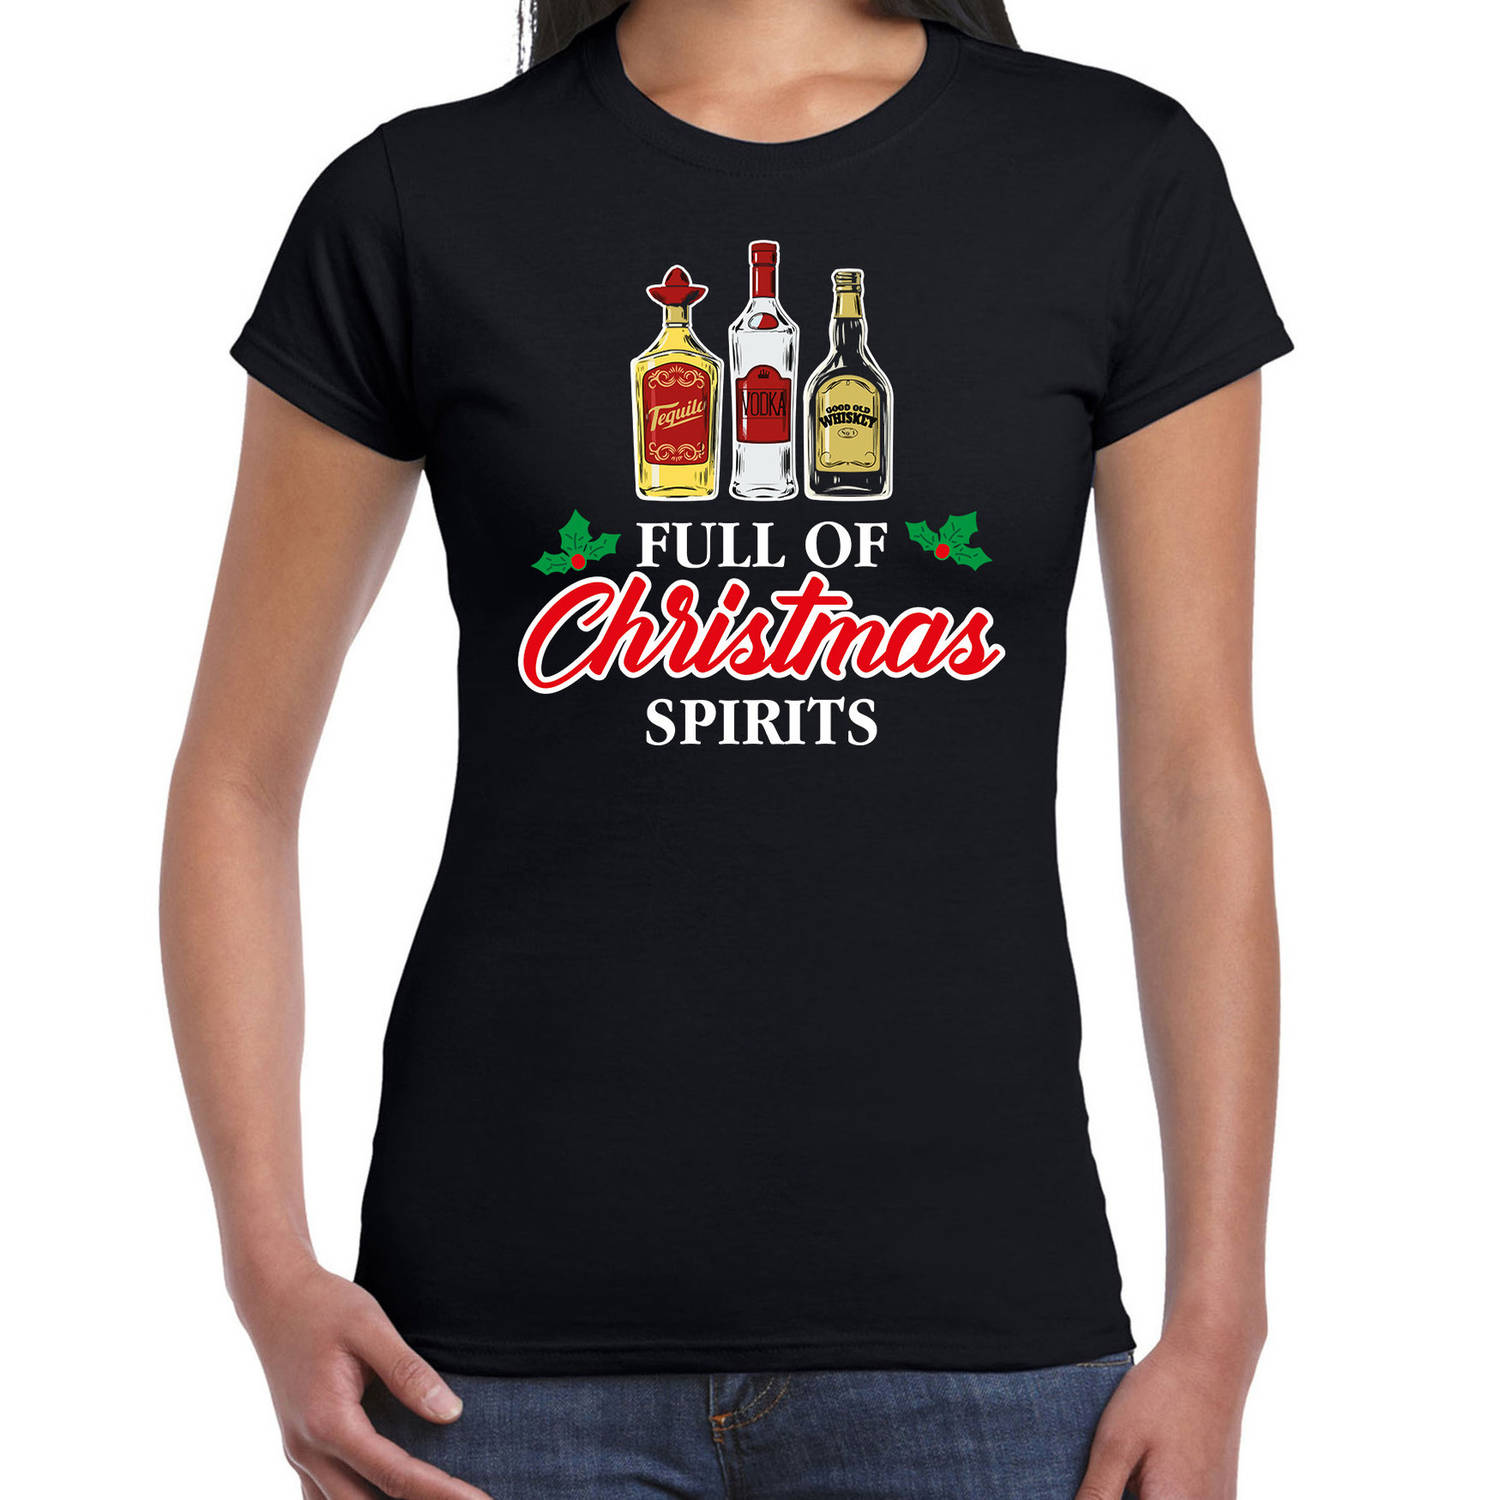 Foute drank humor Kerst T-shirt voor dames zwart 2XL - kerst t-shirts